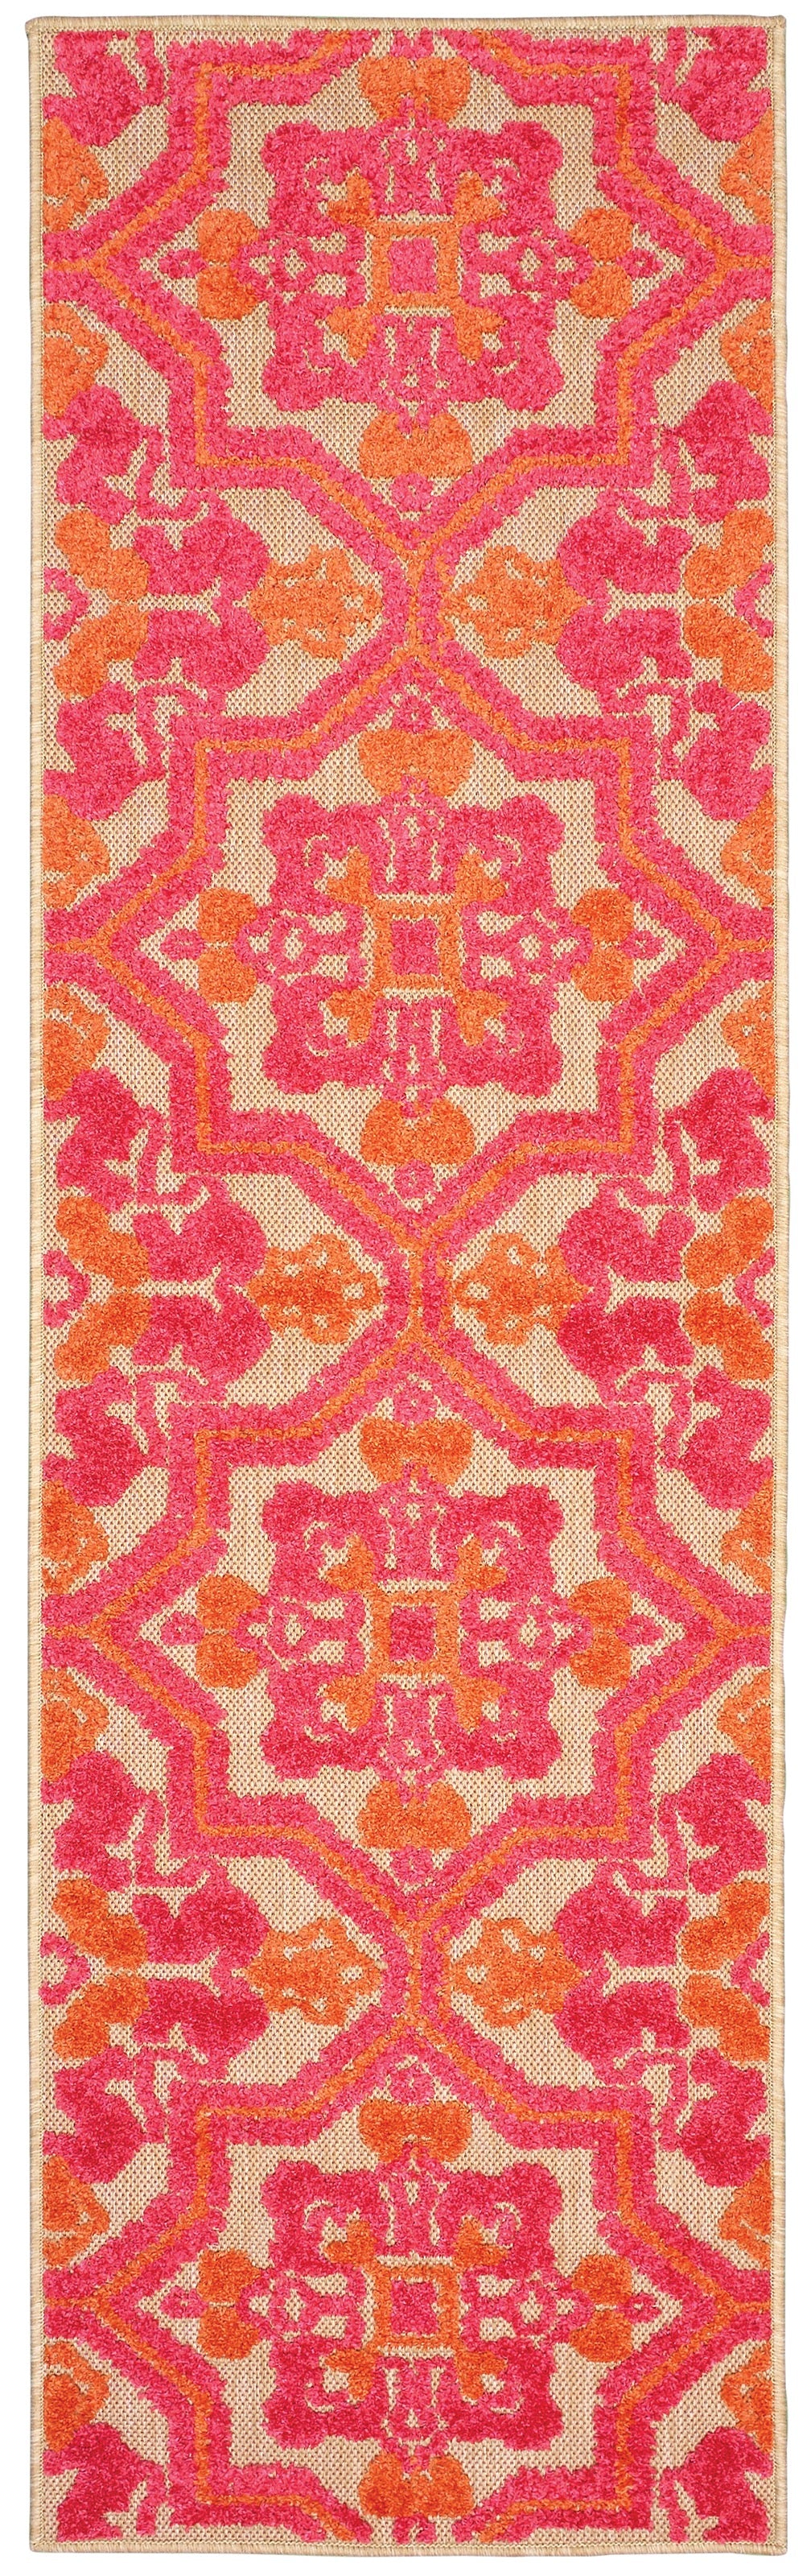 Oriental Weavers Cayman Sand/Pink Geometric 2541V Area Rug